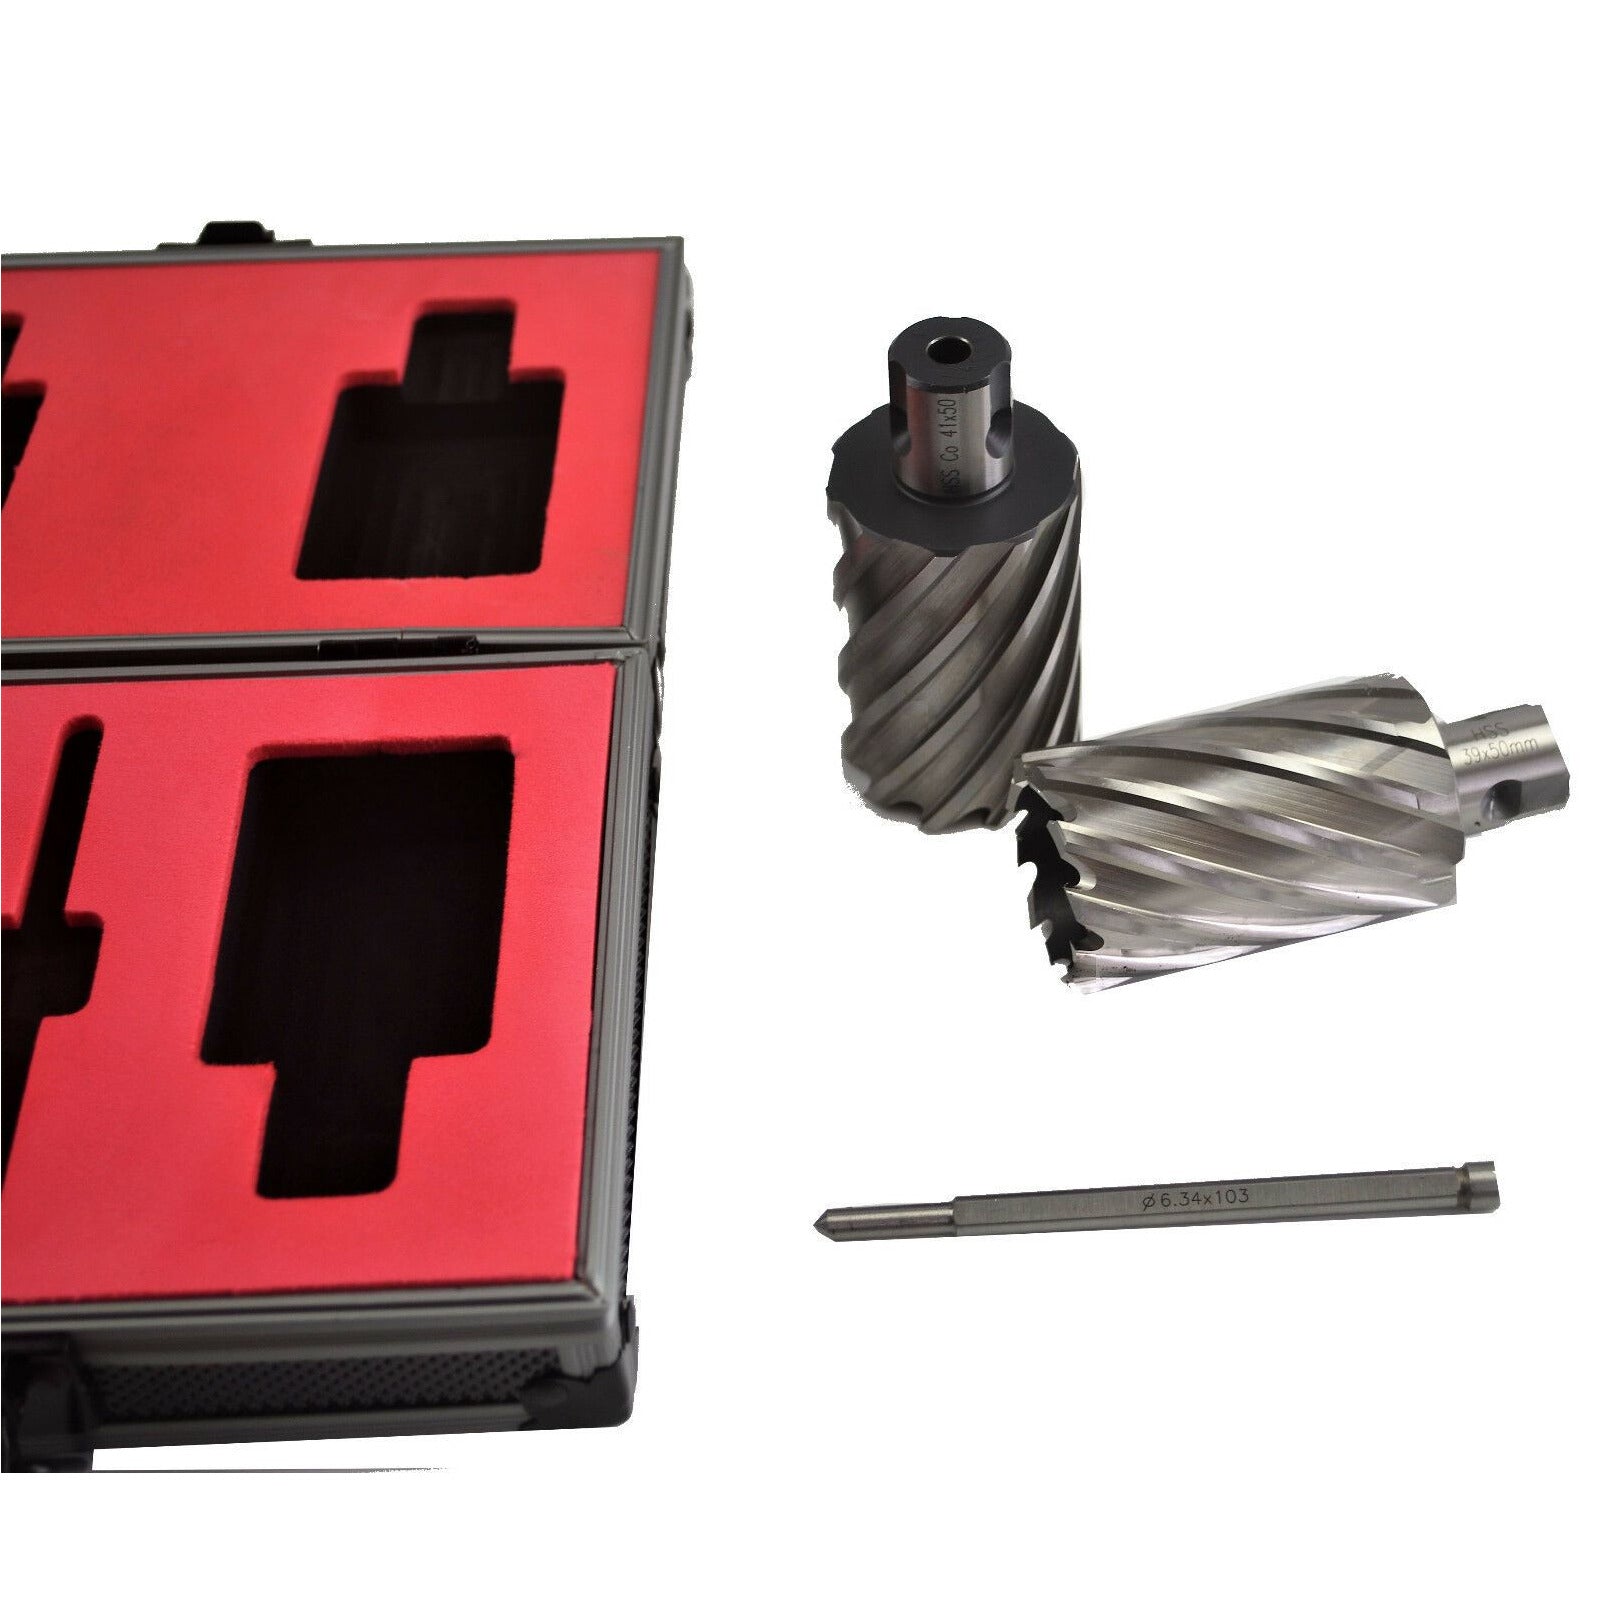 annular cutter kit includes 40x50mm and 42x50mm Broach cutter HSS universal shank CNC industrial metalwork